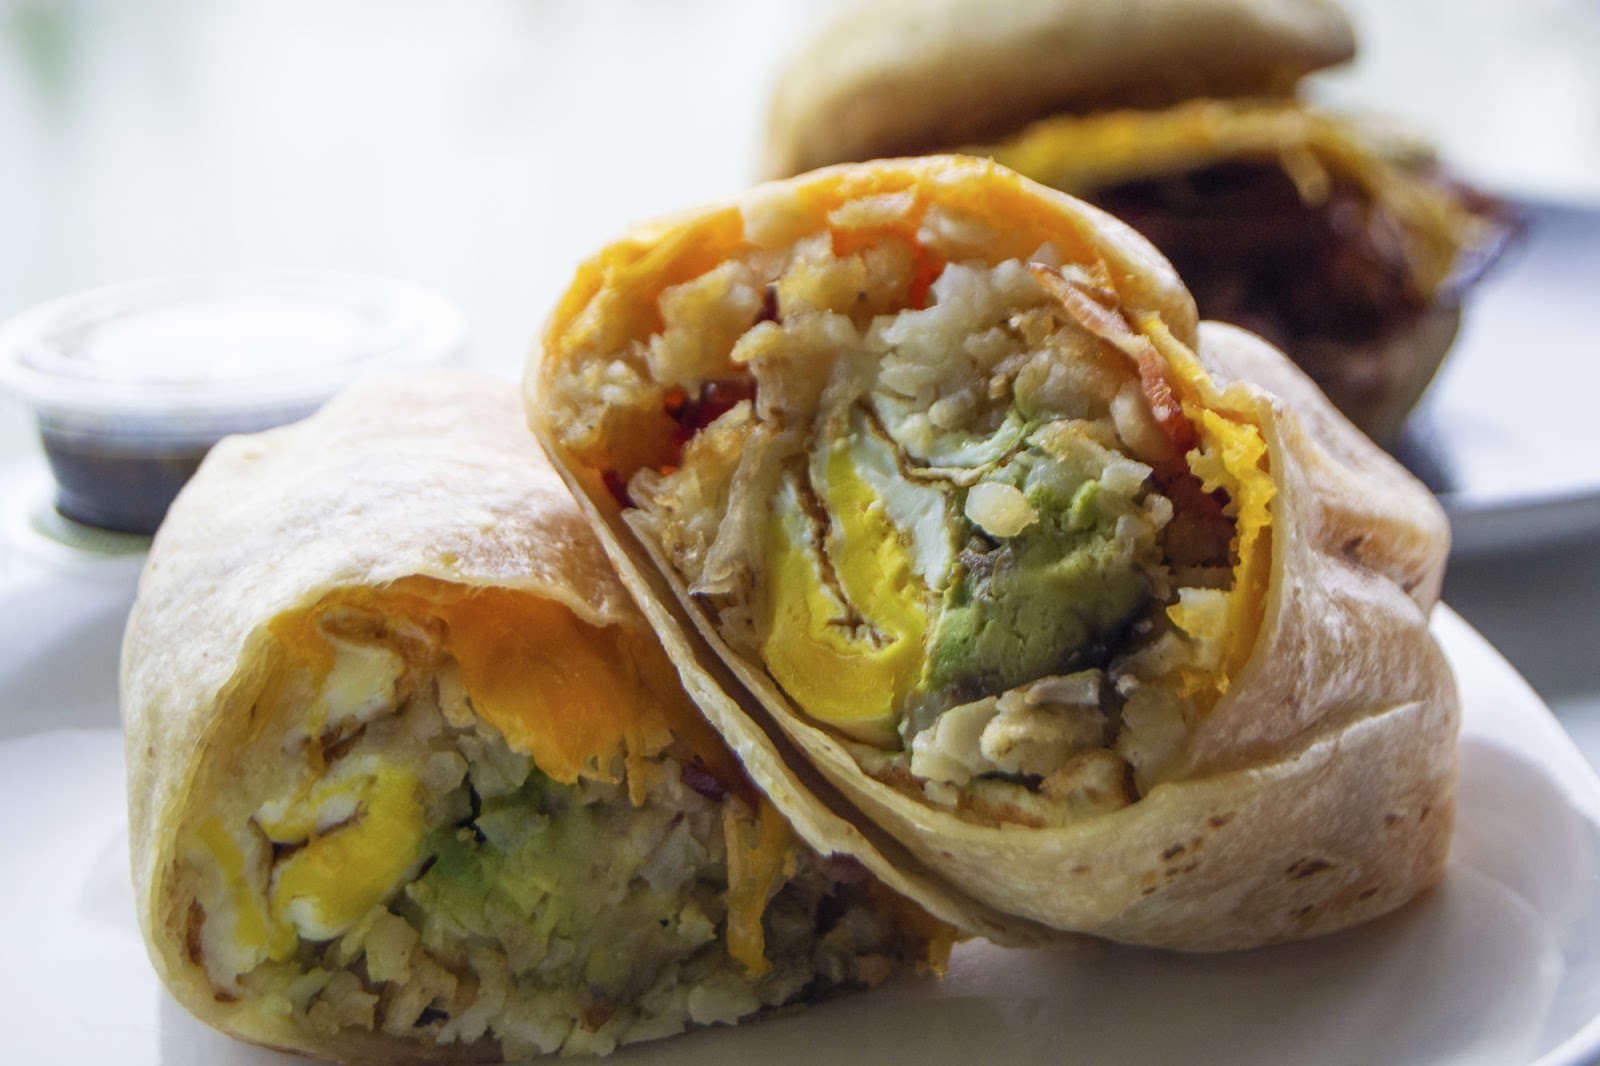 The Rooster's Rico Suave burrito is a beloved LA breakfast burrito.